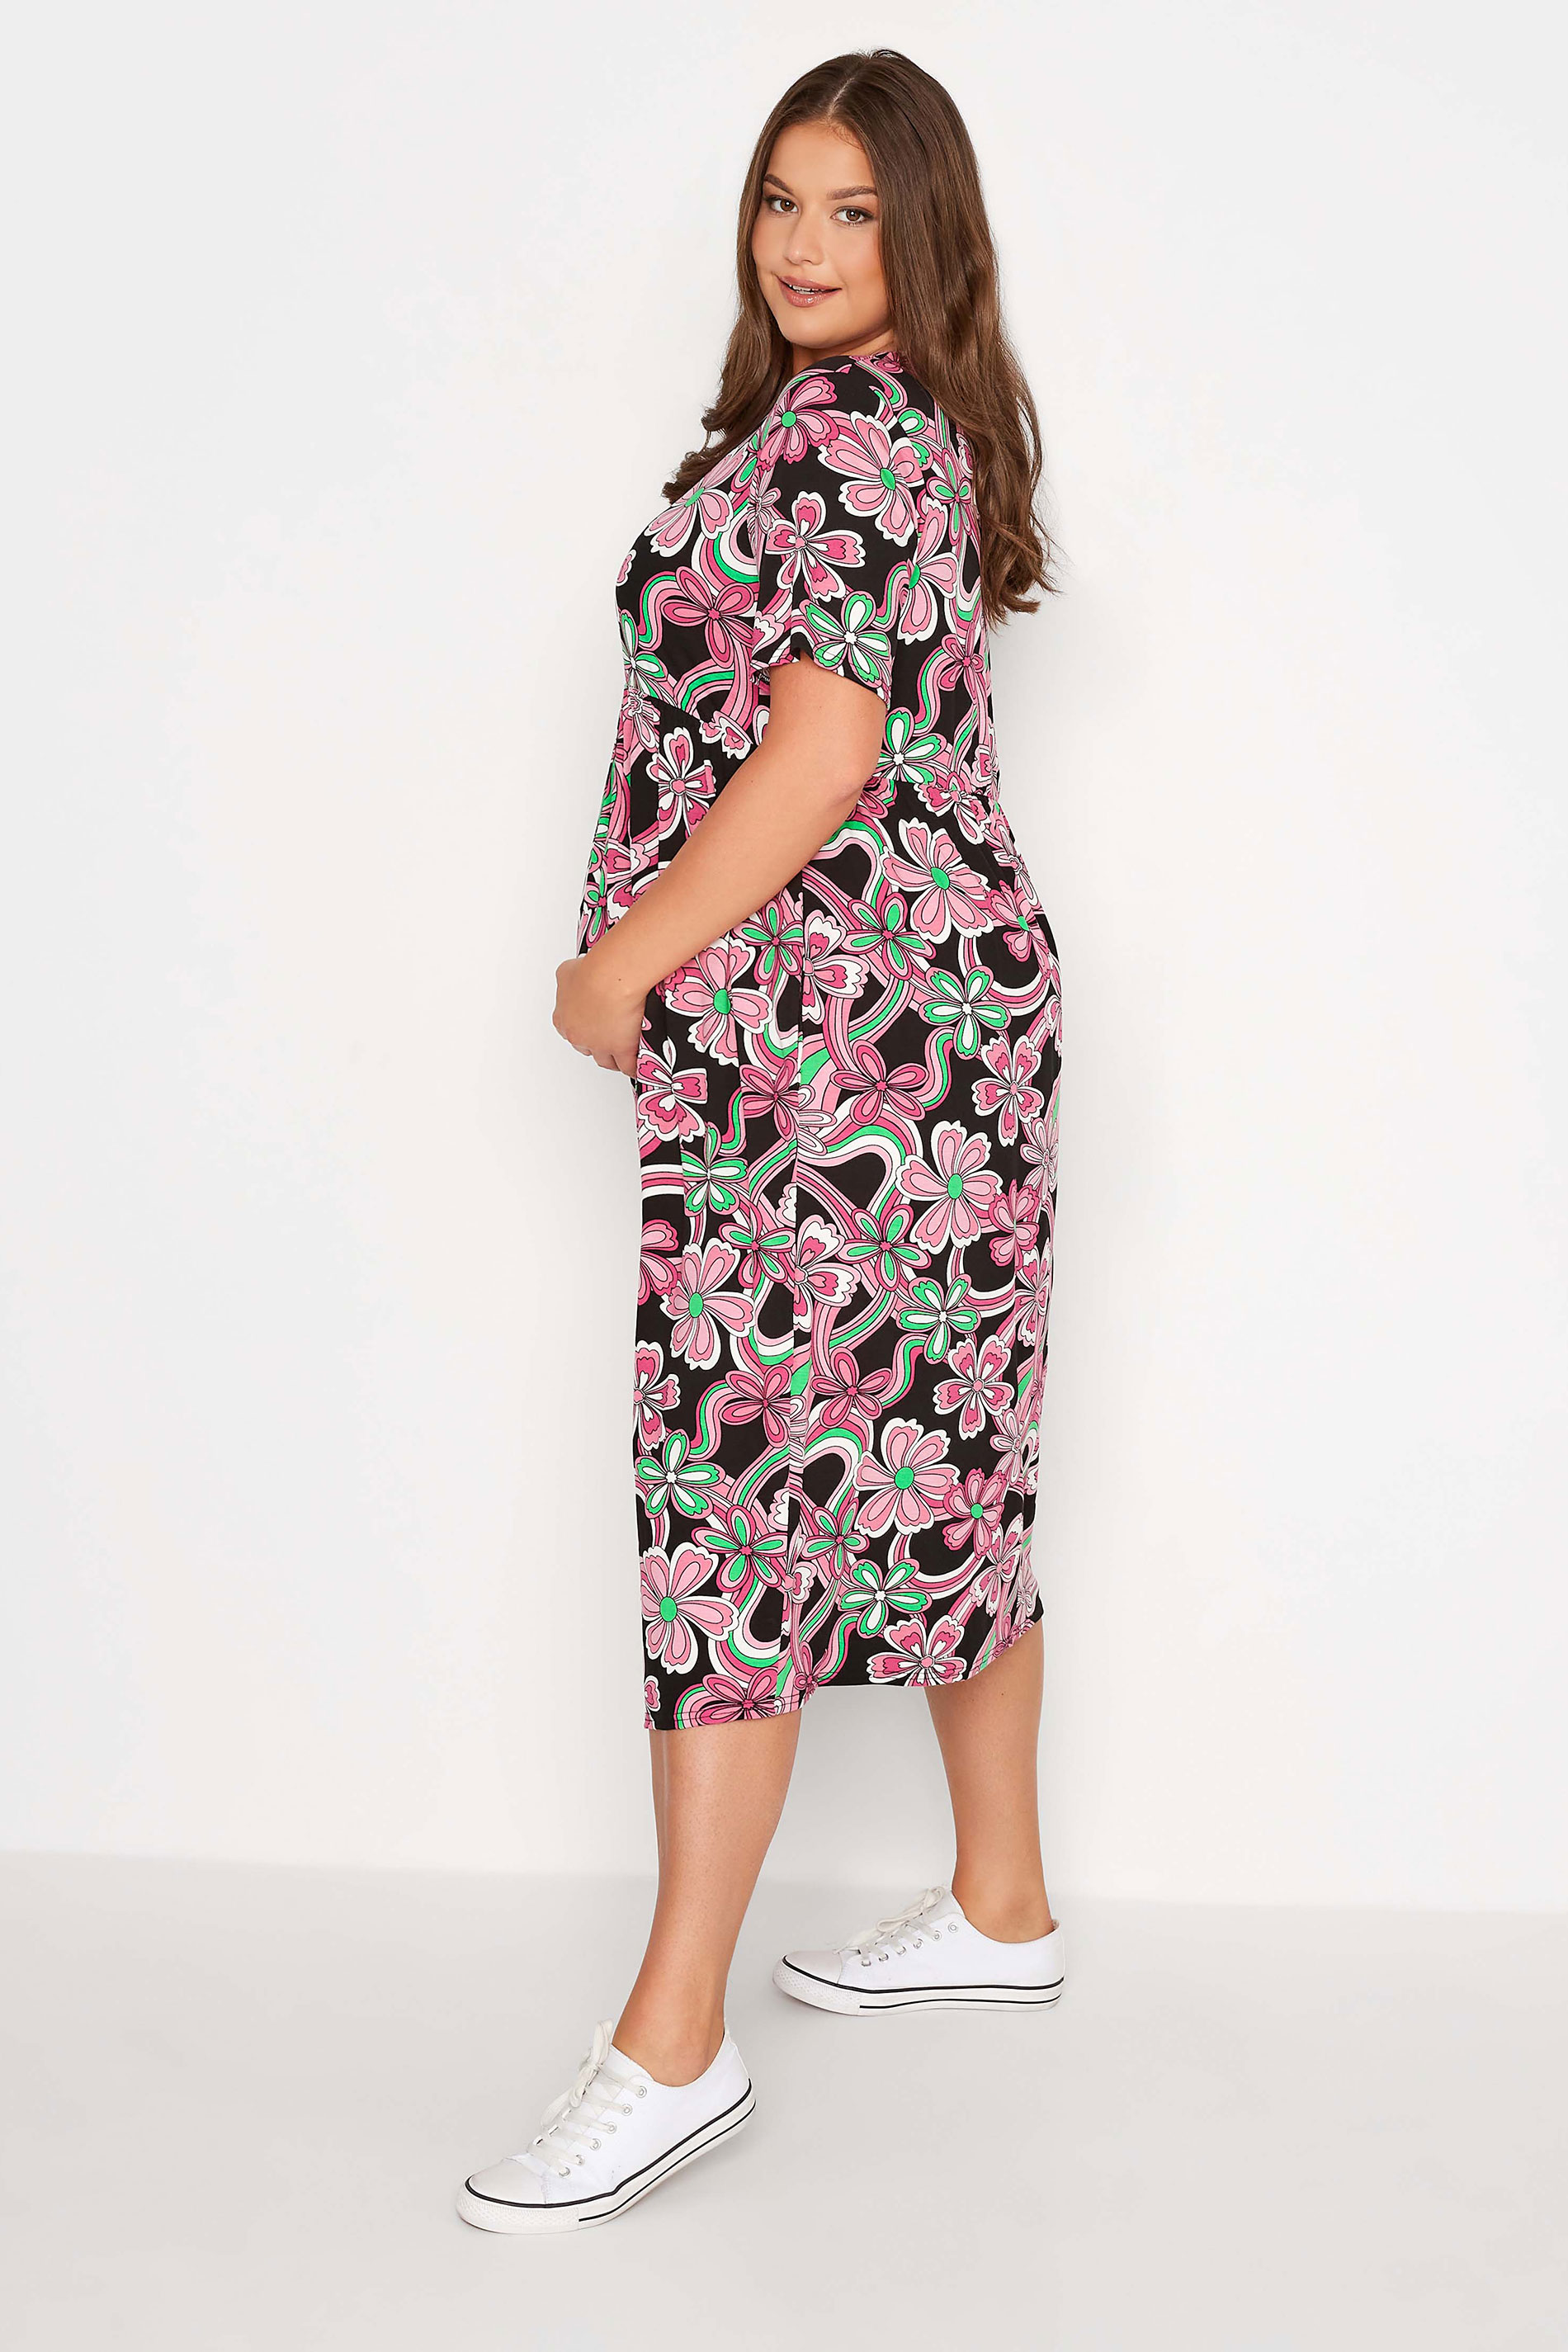 Grande taille  Vêtements de Grossesse Grande taille  Robe de grossesse | BUMP IT UP MATERNITY Curve Black Floral Pocket Dress - JY44062